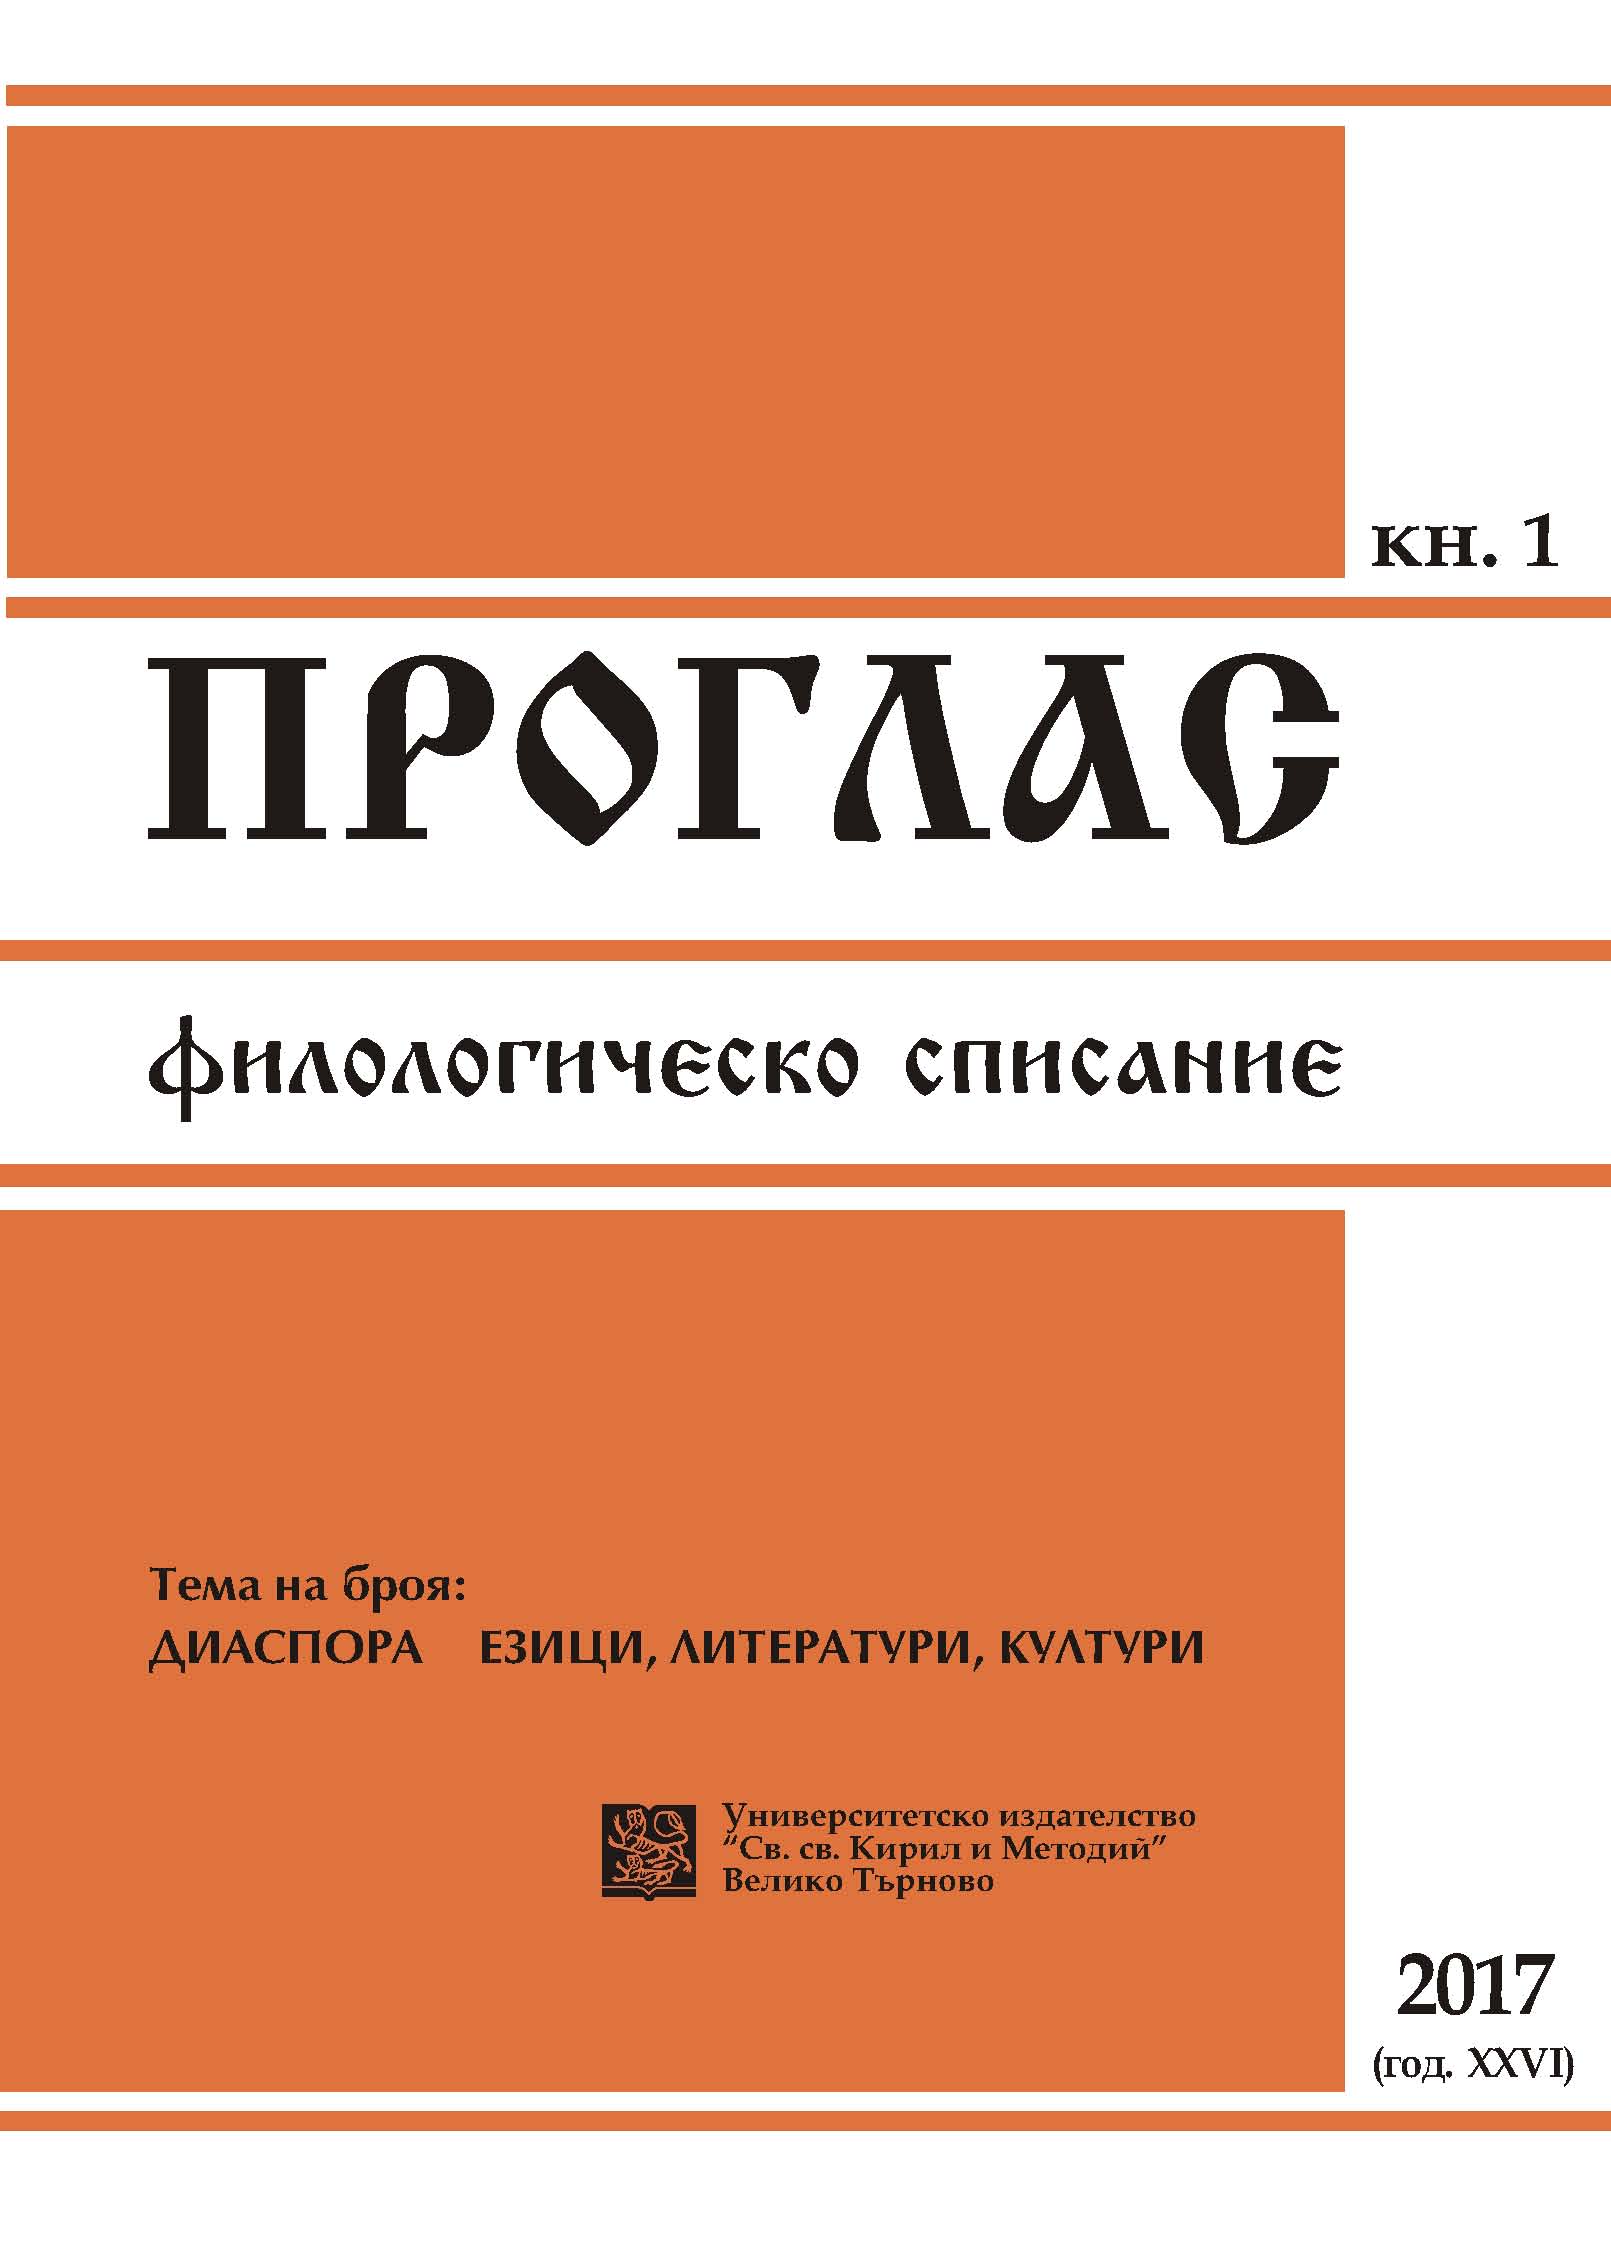 Bulgarian Writers from Bessarabia Cover Image